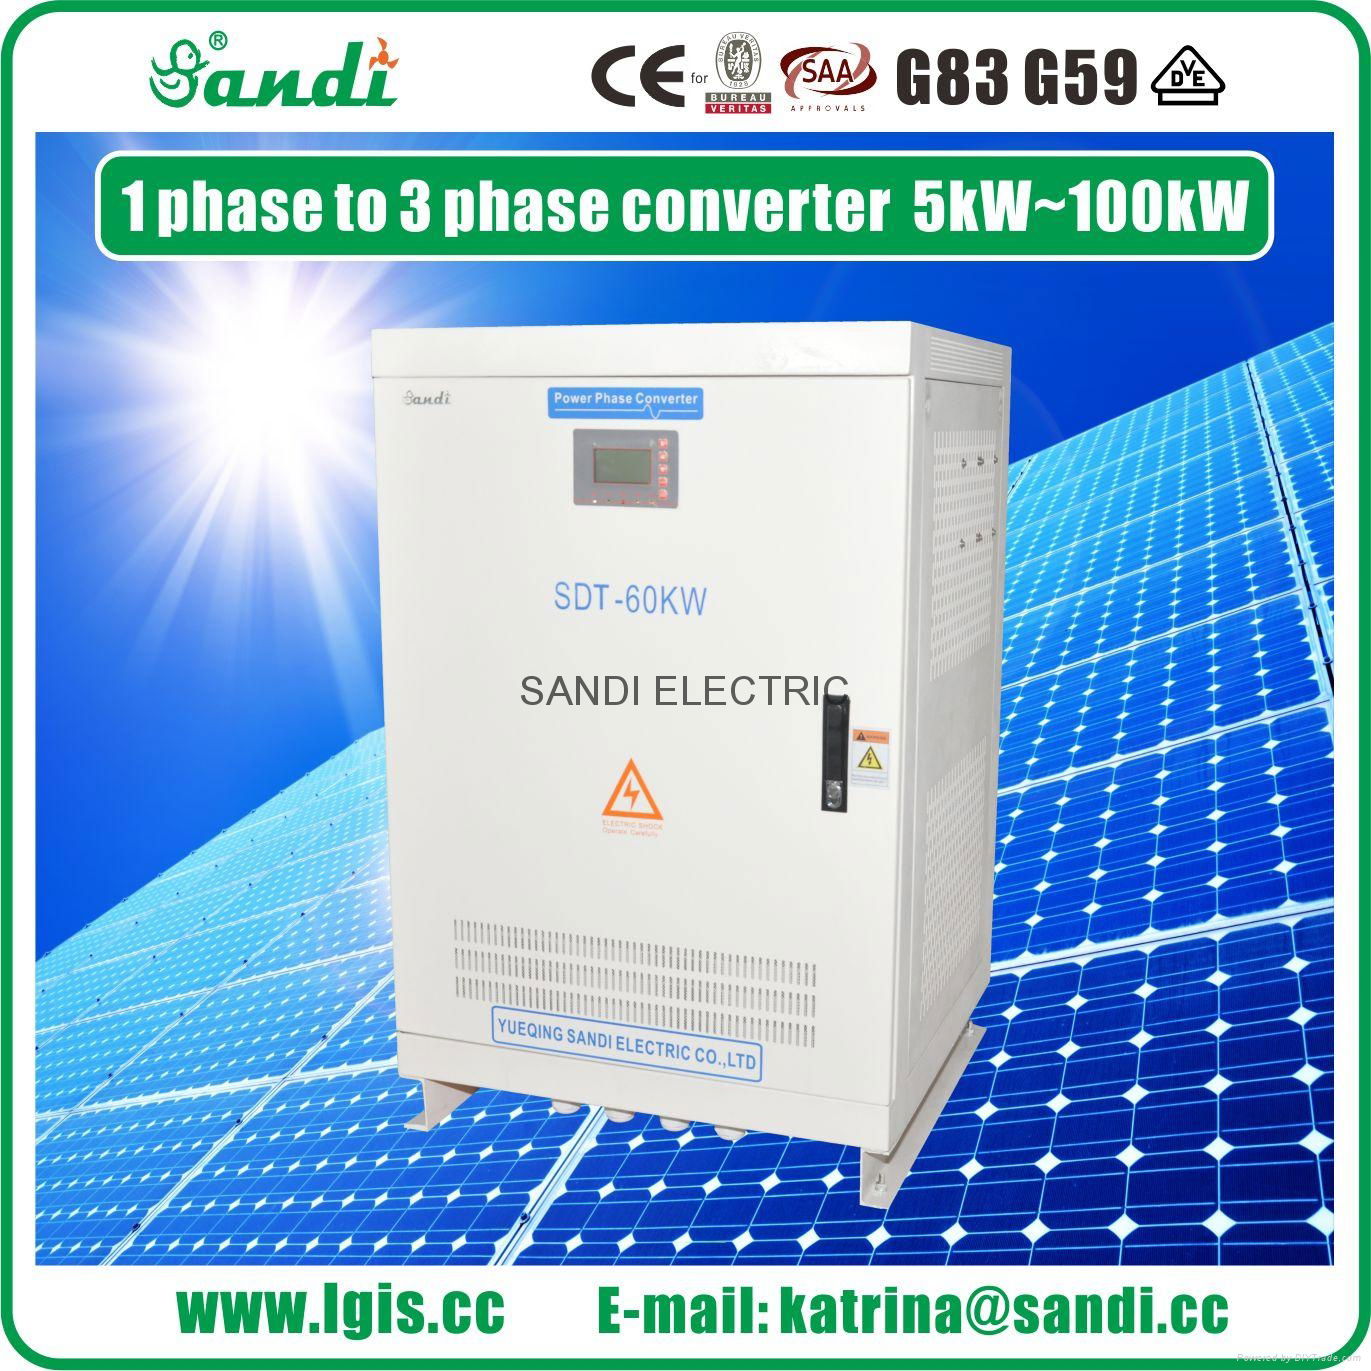 60kW Digital Phase Converter 220VAC single phase to 380VAC three phase converter